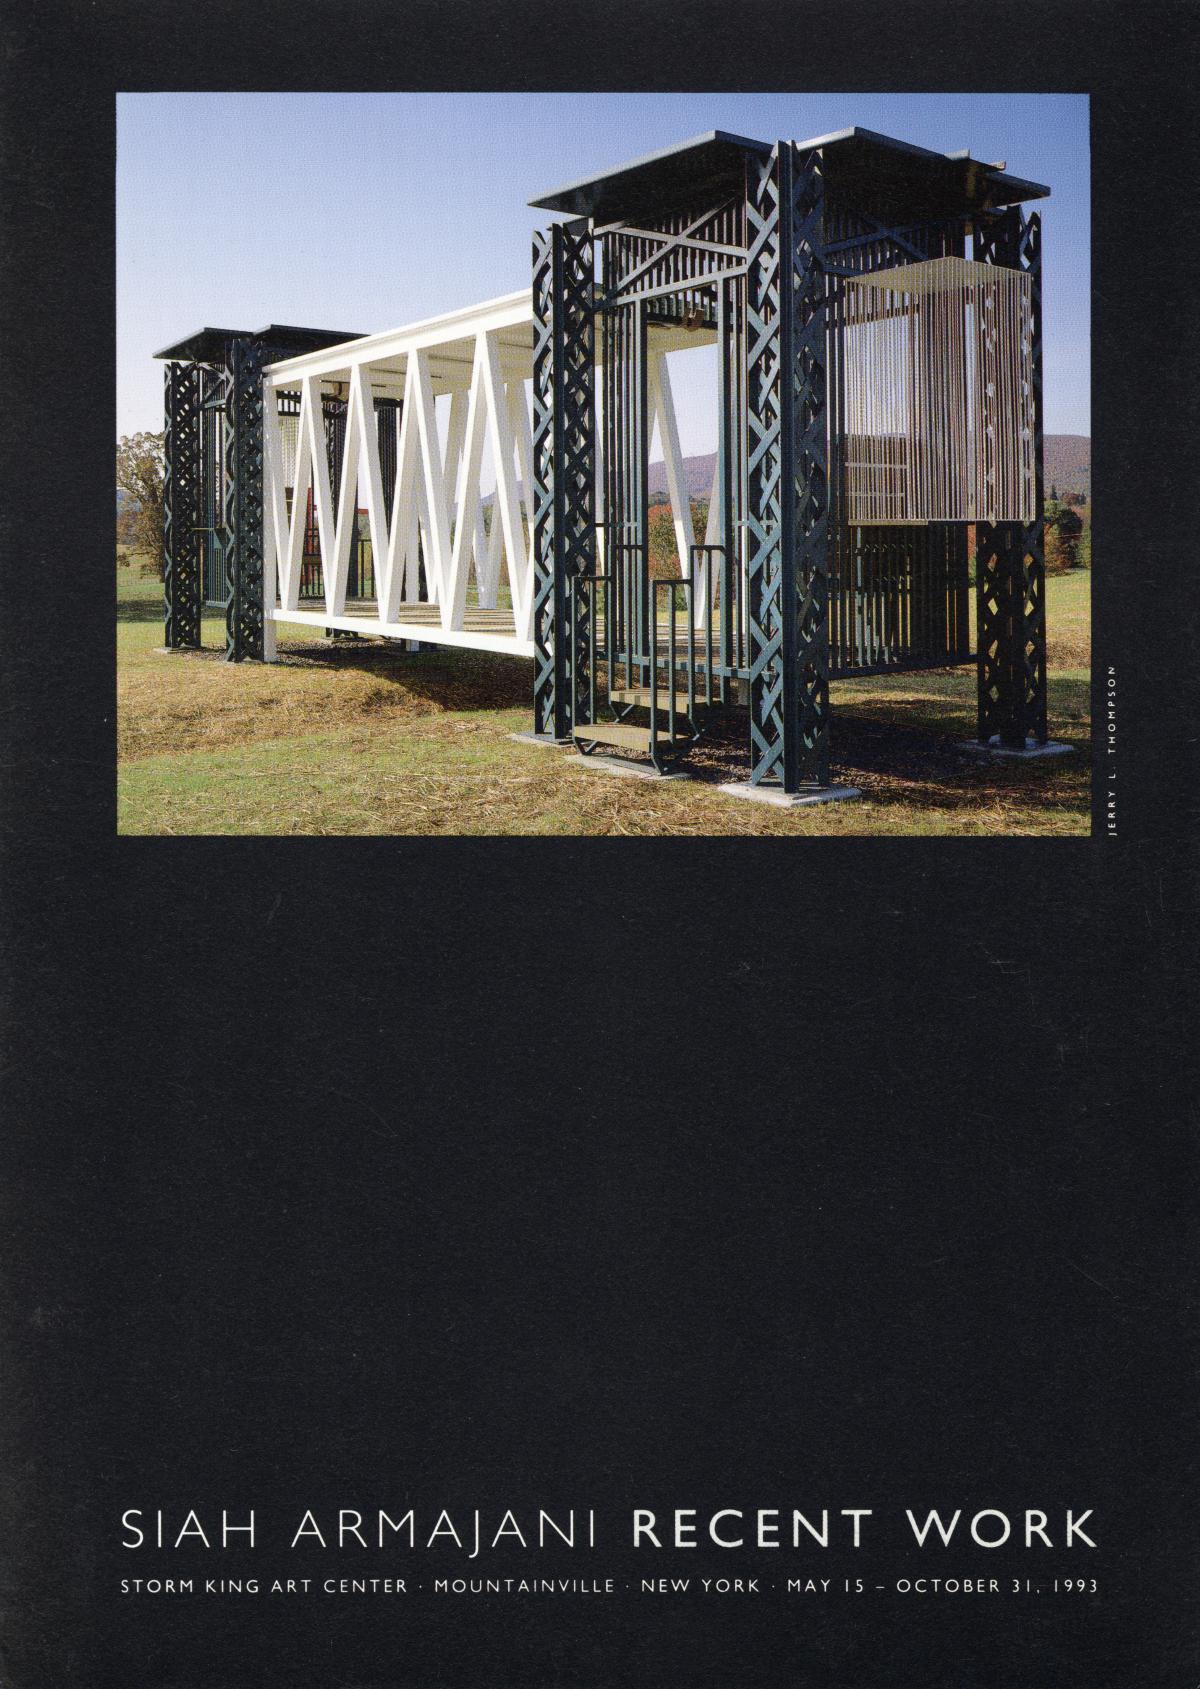 Siah Armajani: Recent Work, May 15 - October 31, 1993, catalogue cover